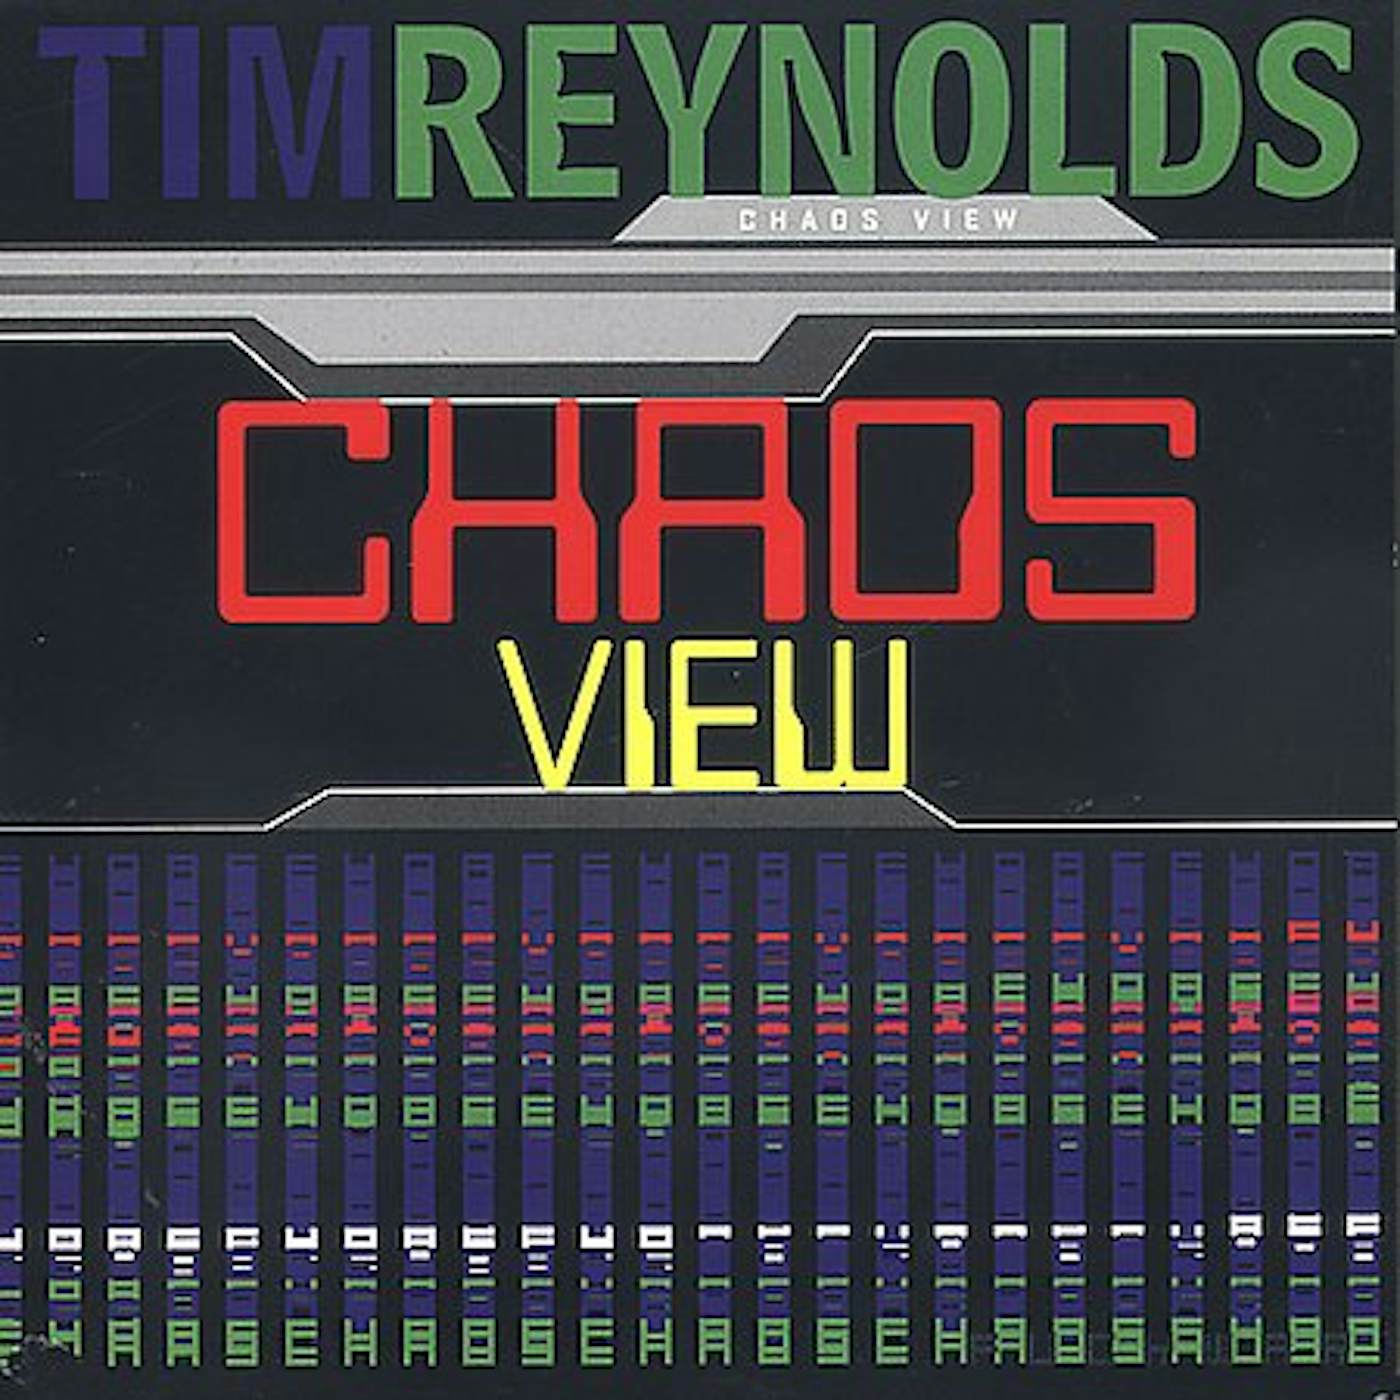 Tim Reynolds CHAOS VIEW CD